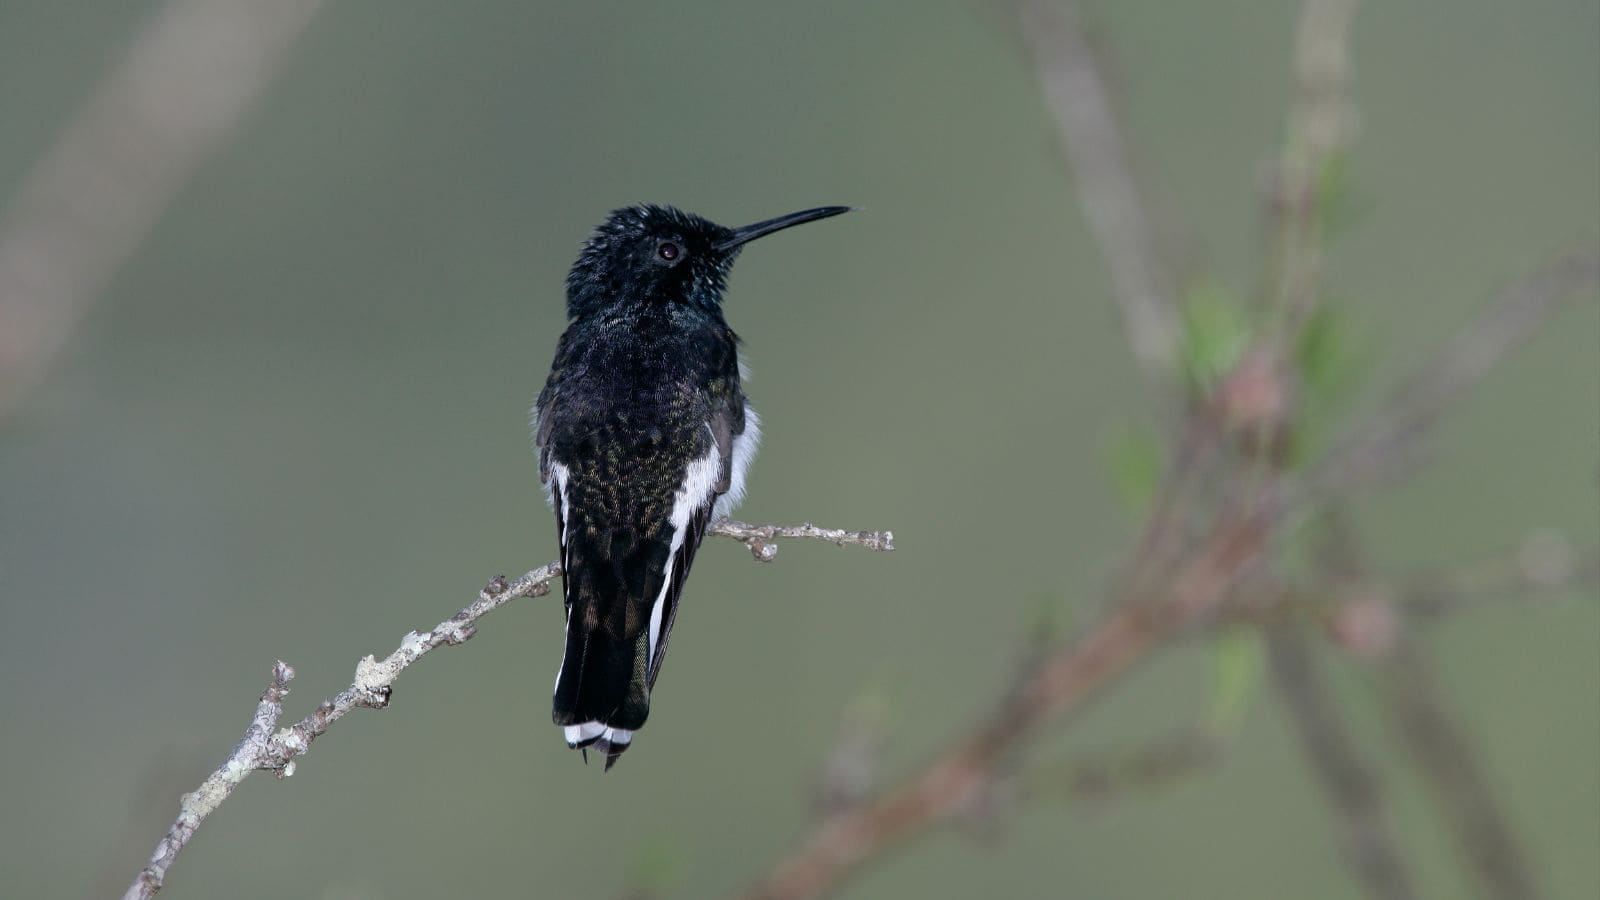 Black Jacobin hummingbirds